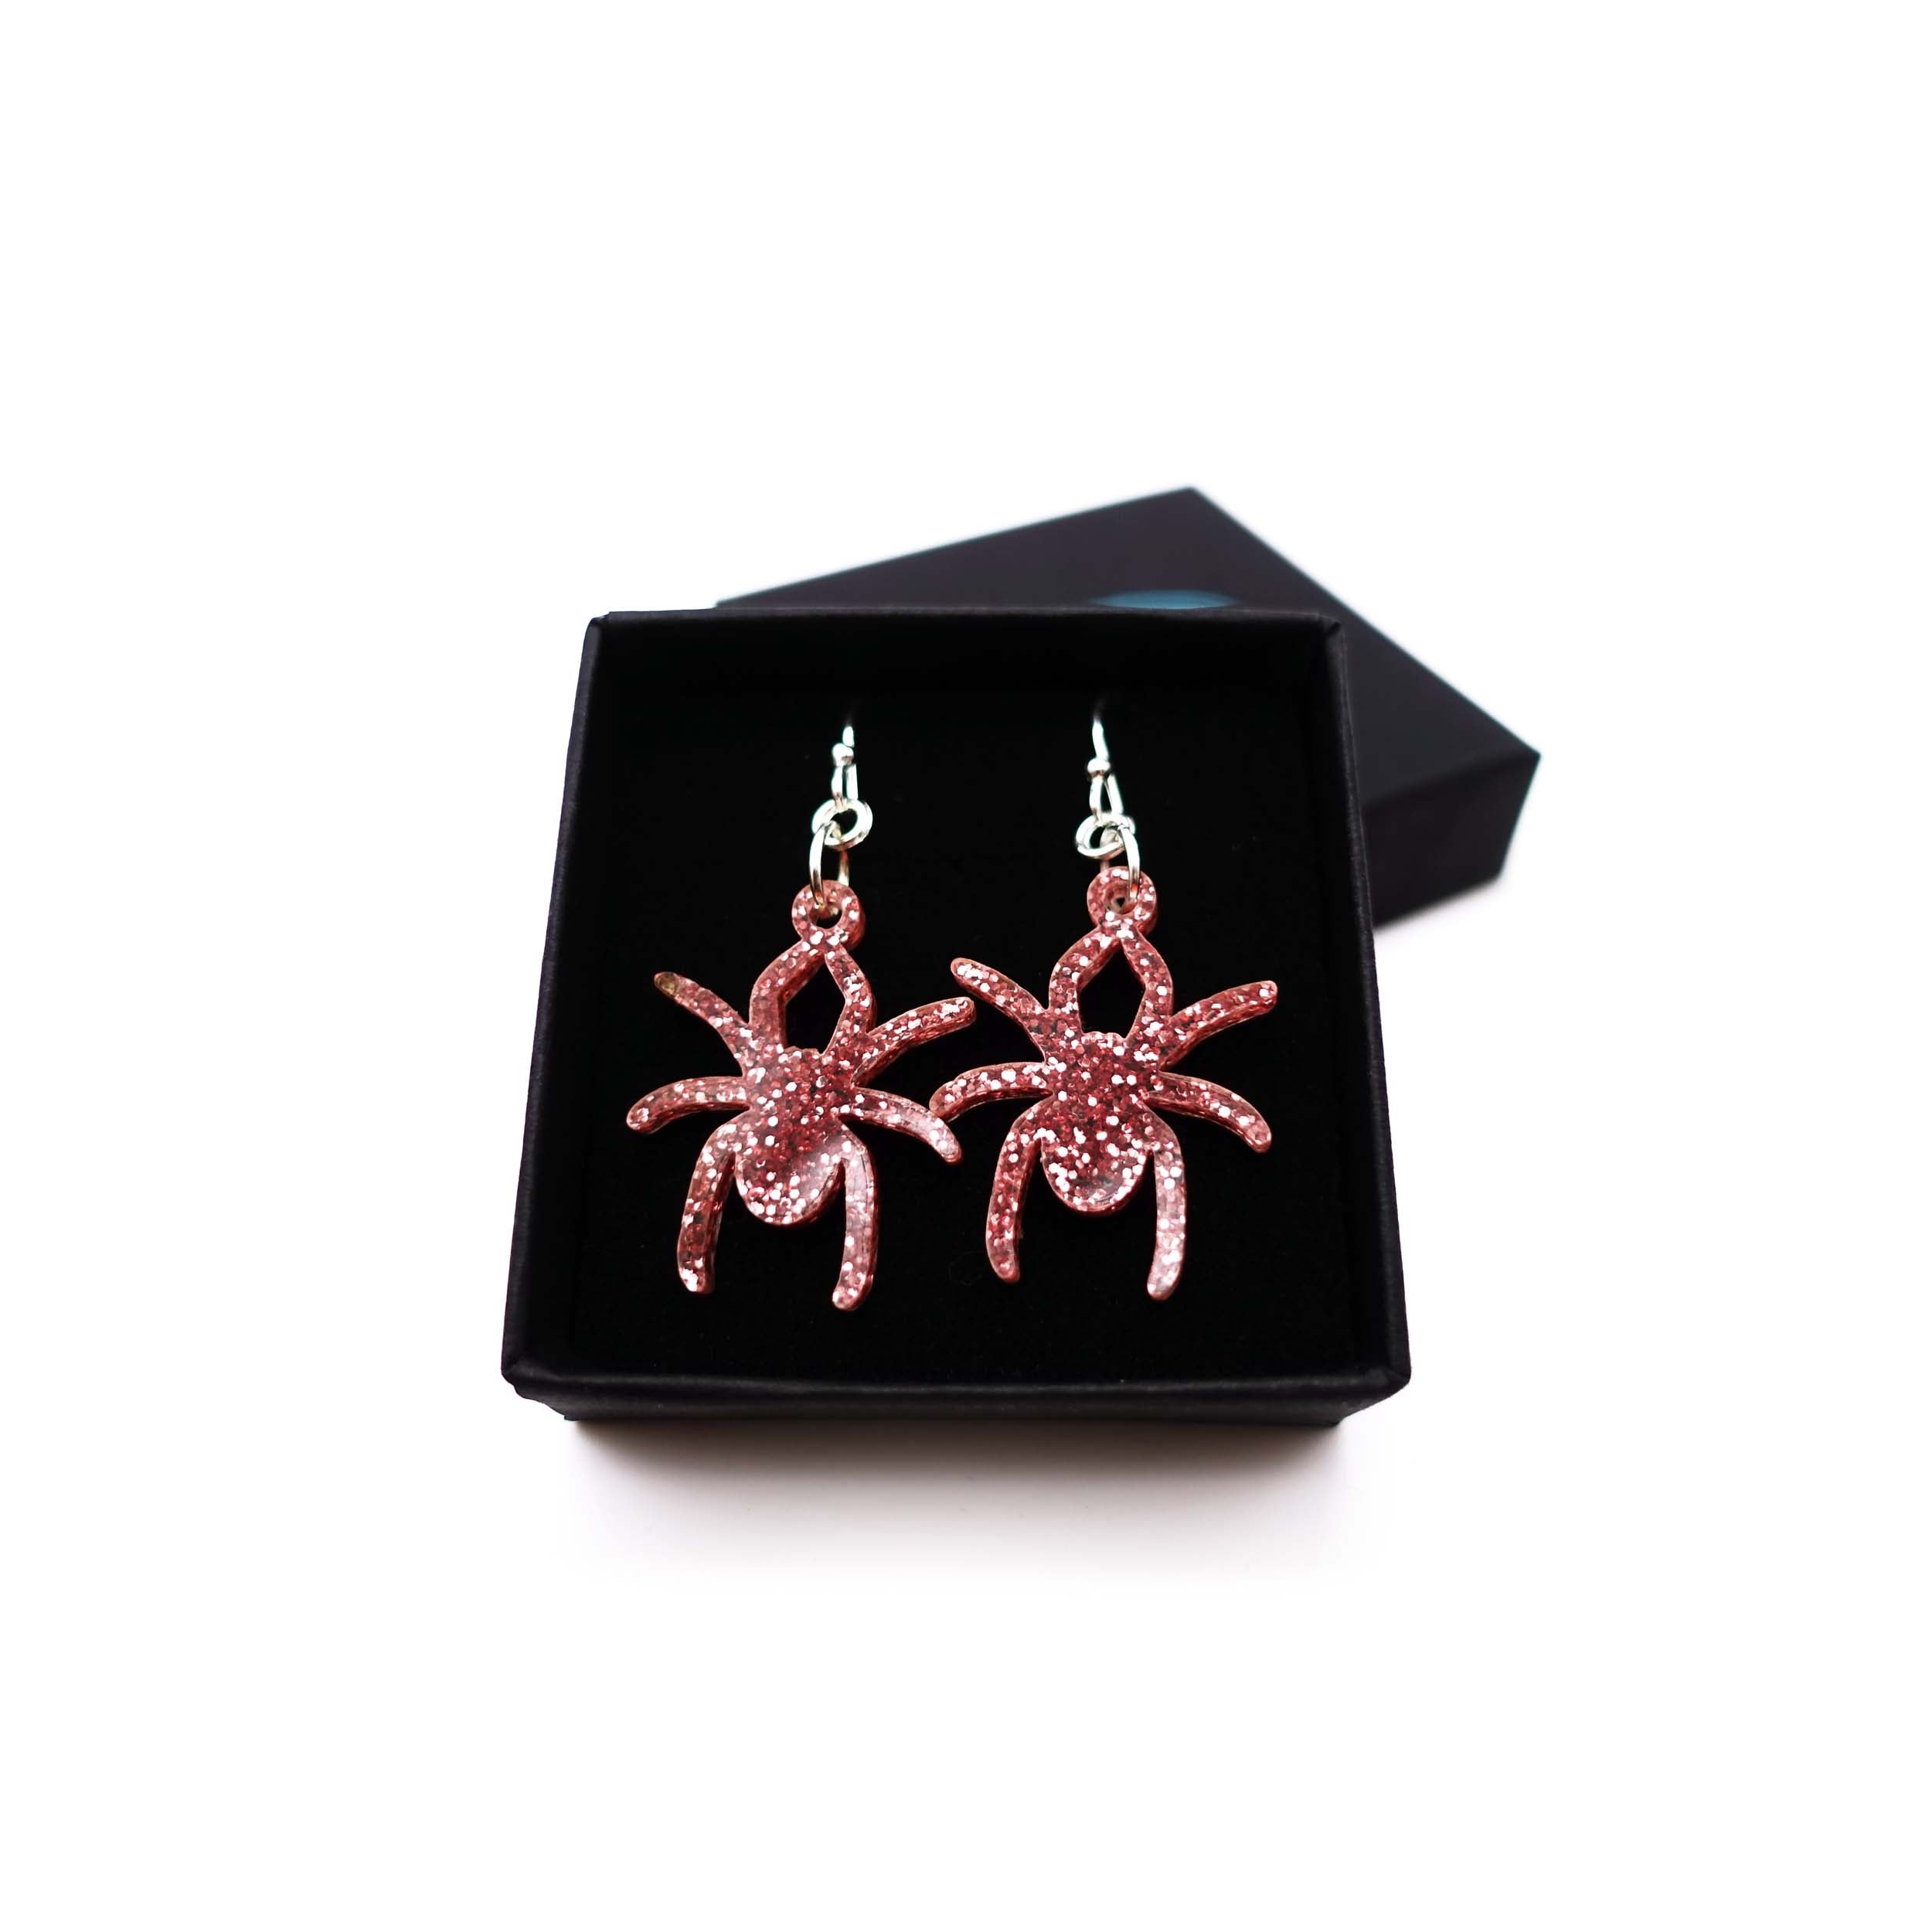 Lady Hale commemorative spider earrings in rose glitter shown in box.